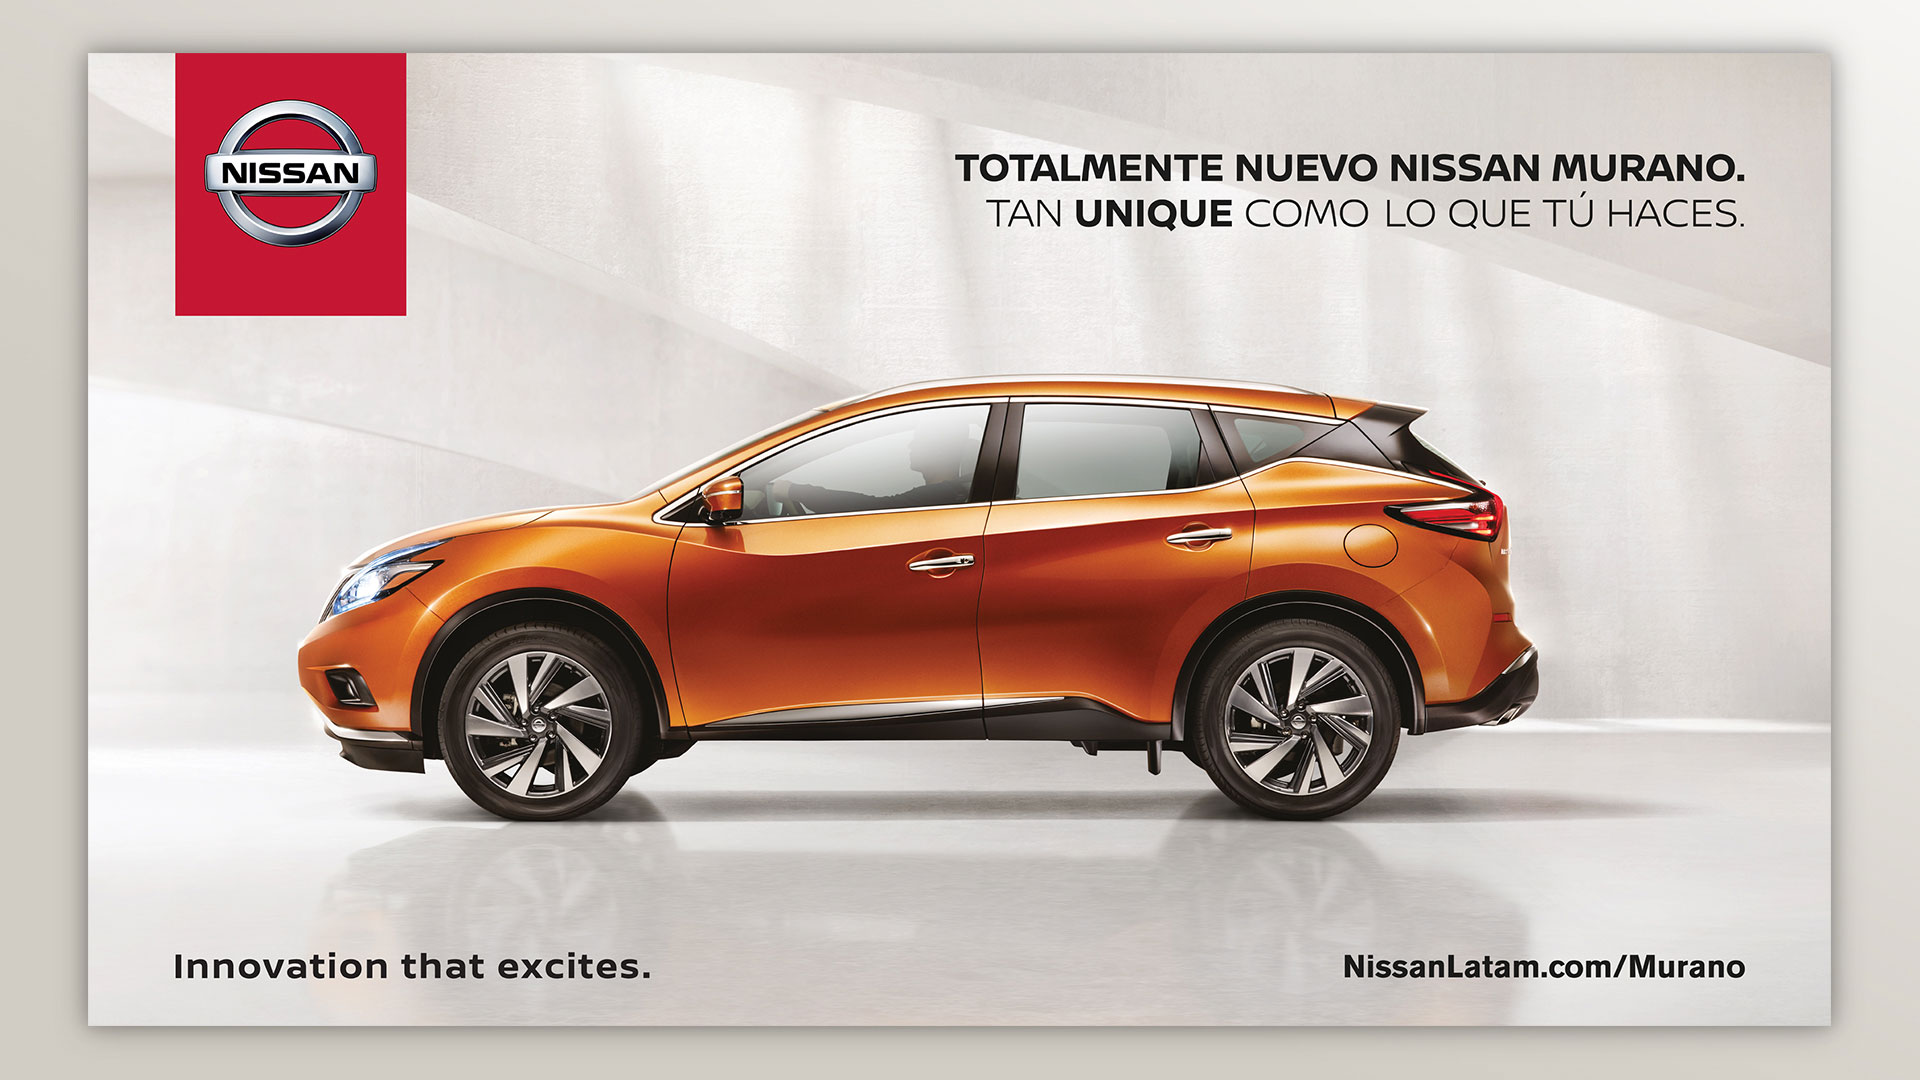 Nissan_Advertising